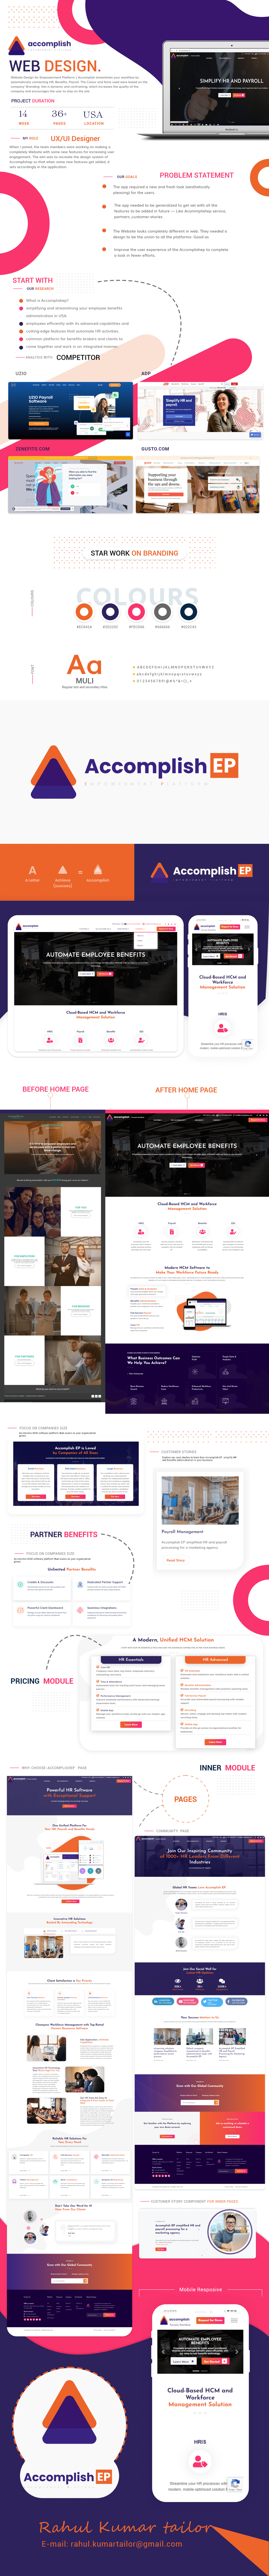 Case Study Layout re-brand UI UI /Ux case Study ux visual design website redesign